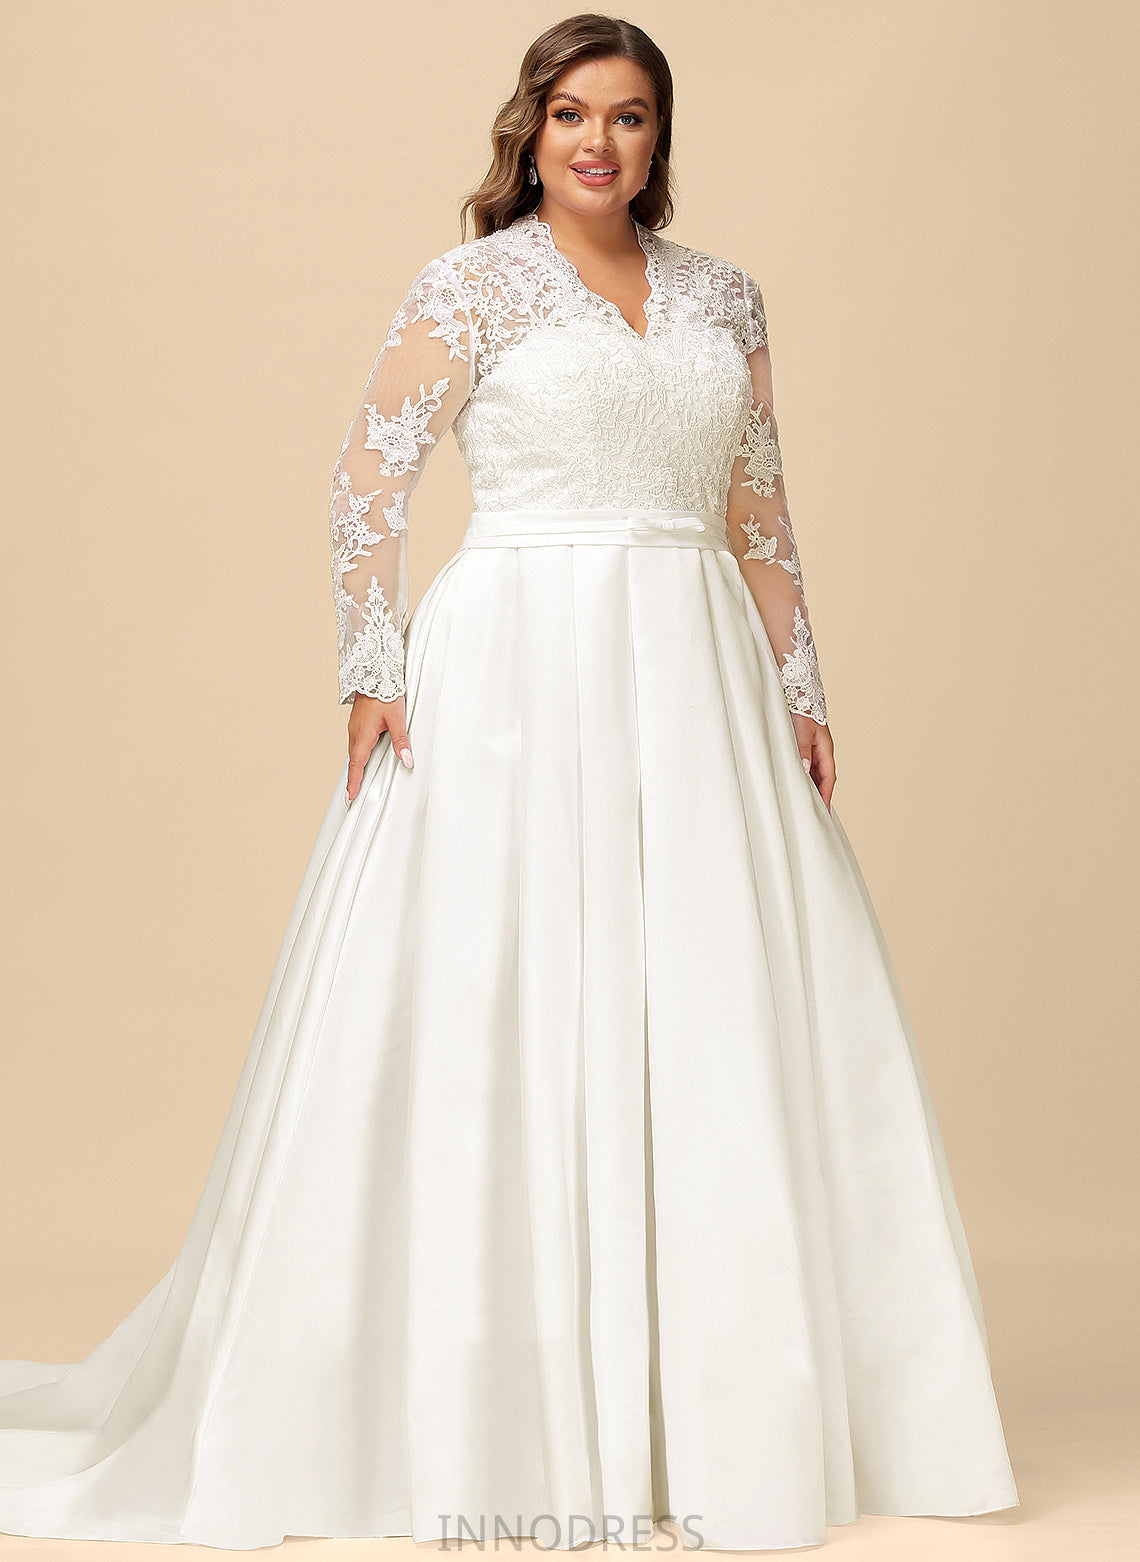 V-neck Wedding Lace Ball-Gown/Princess Elena With Satin Bow(s) Dress Train Wedding Dresses Court